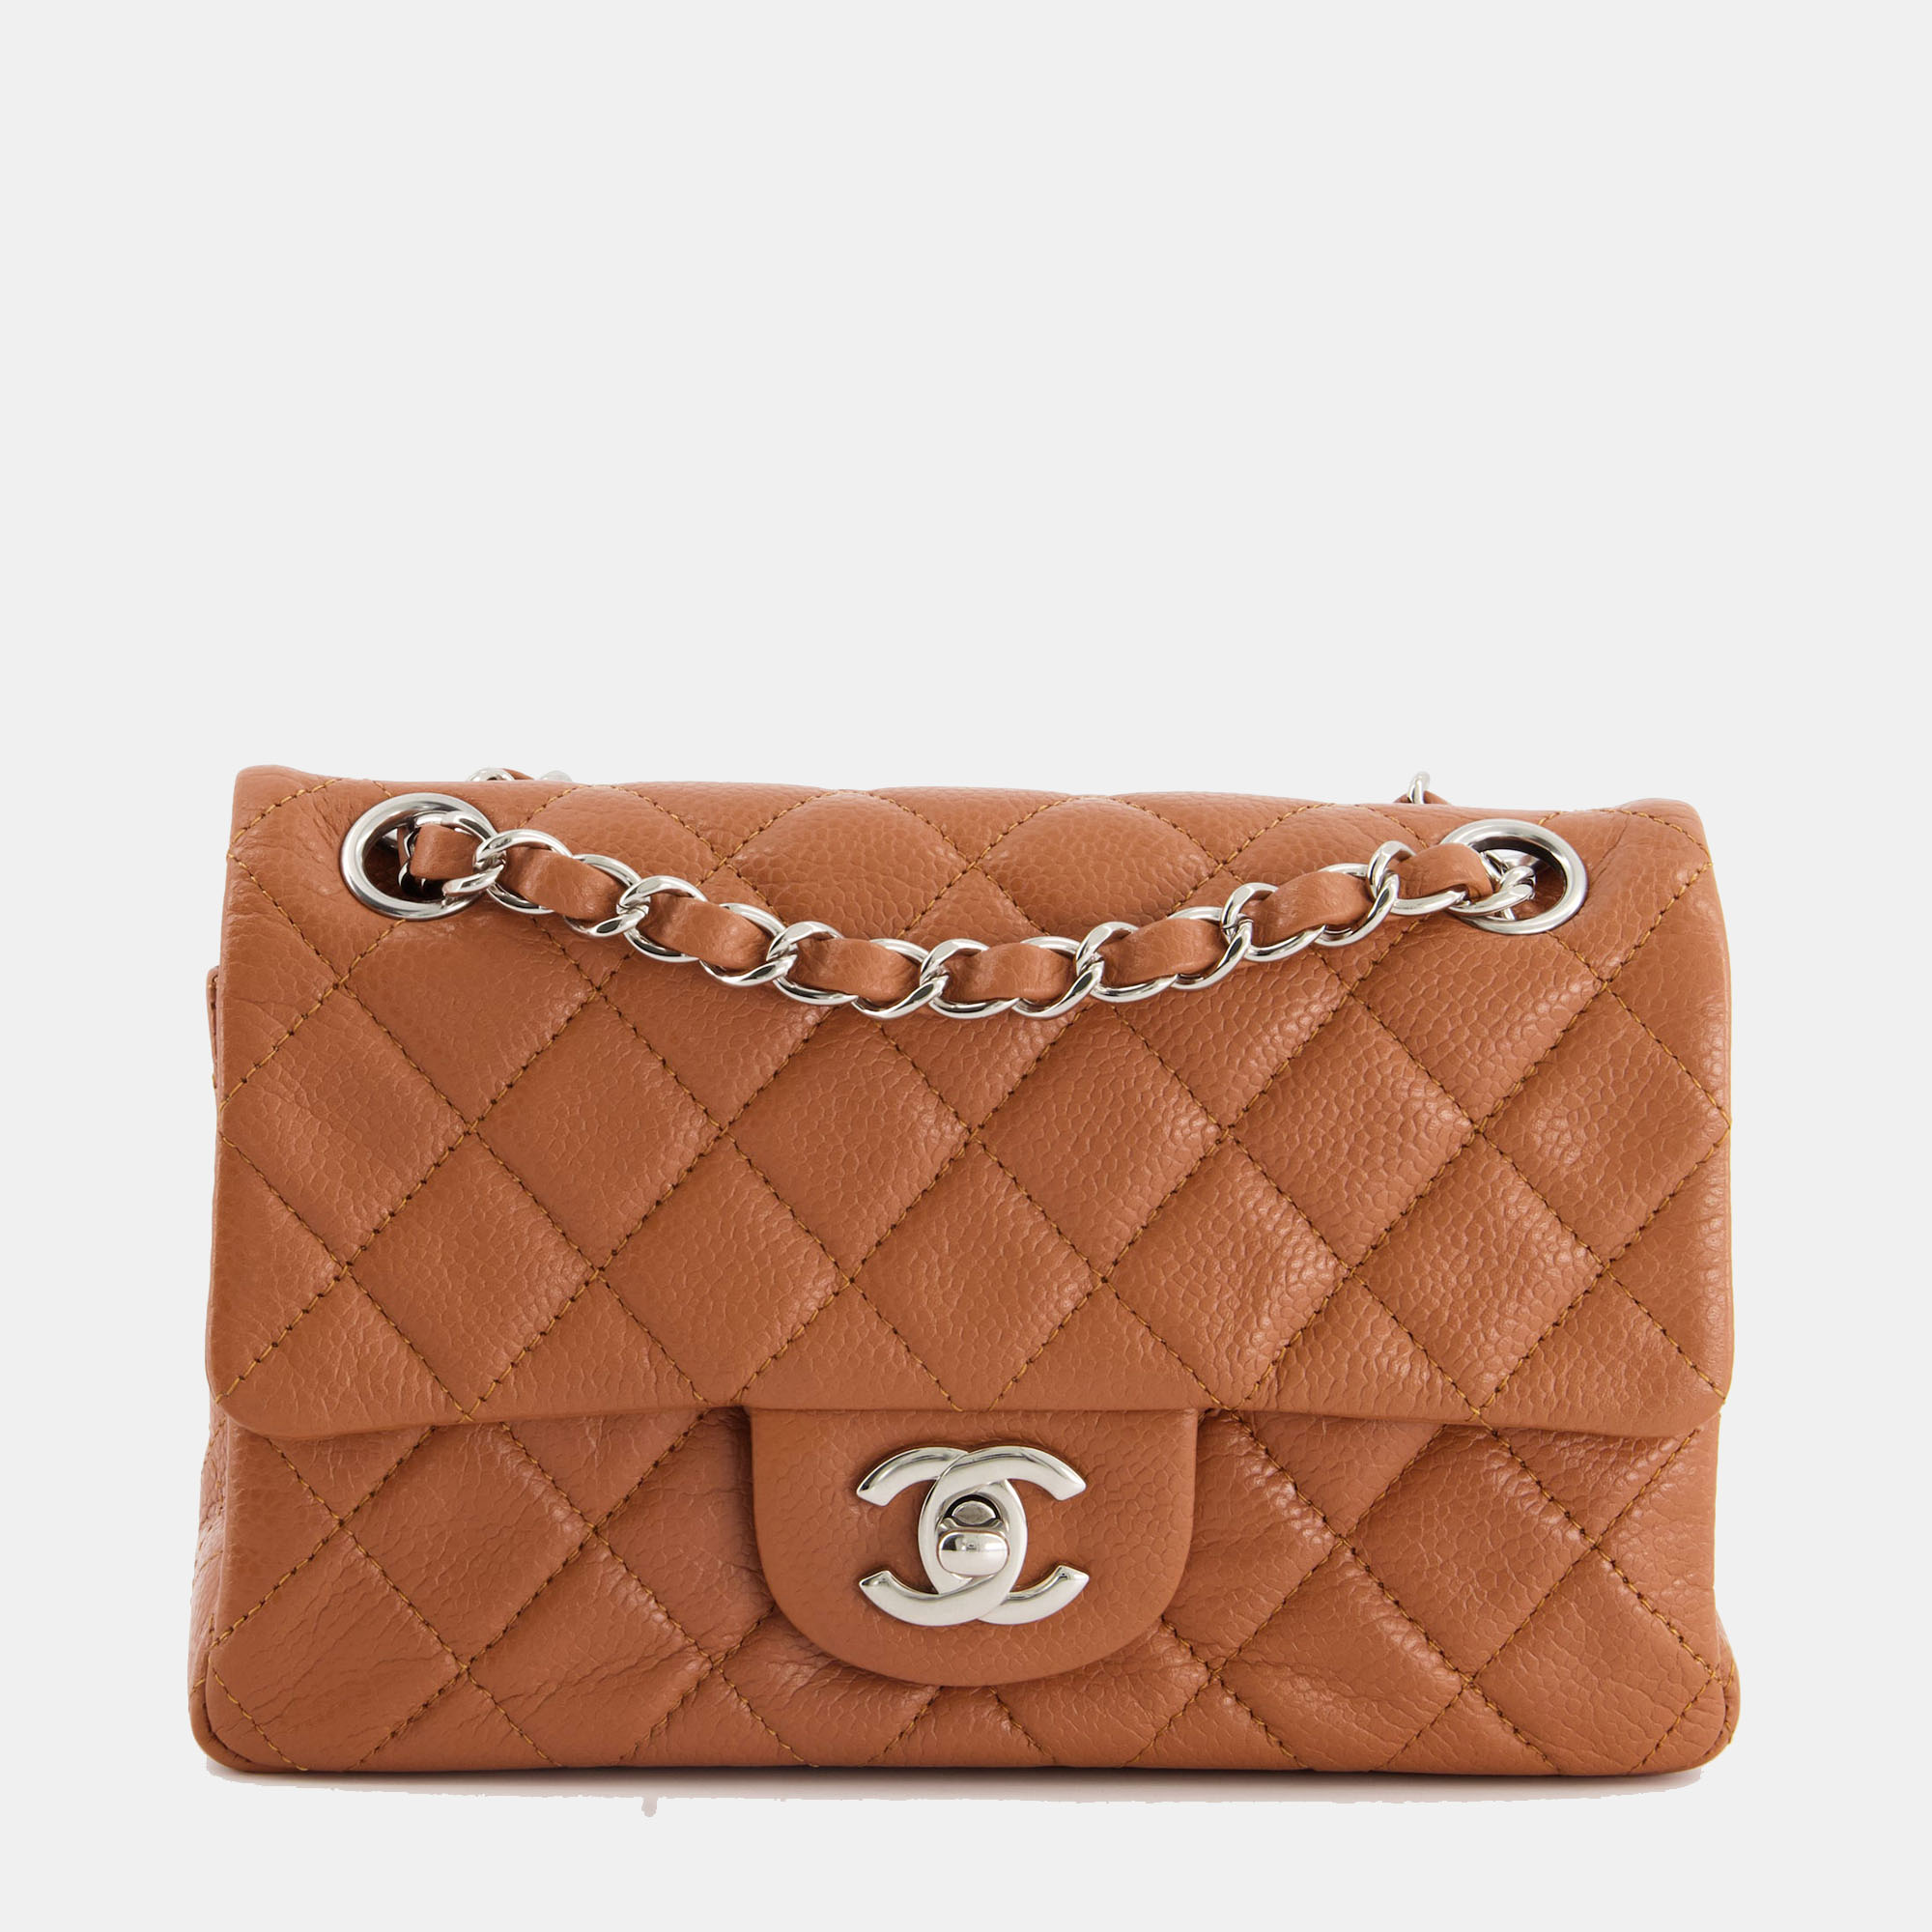 Chanel caramel mini rectangular bag in caviar leather with silver hardware